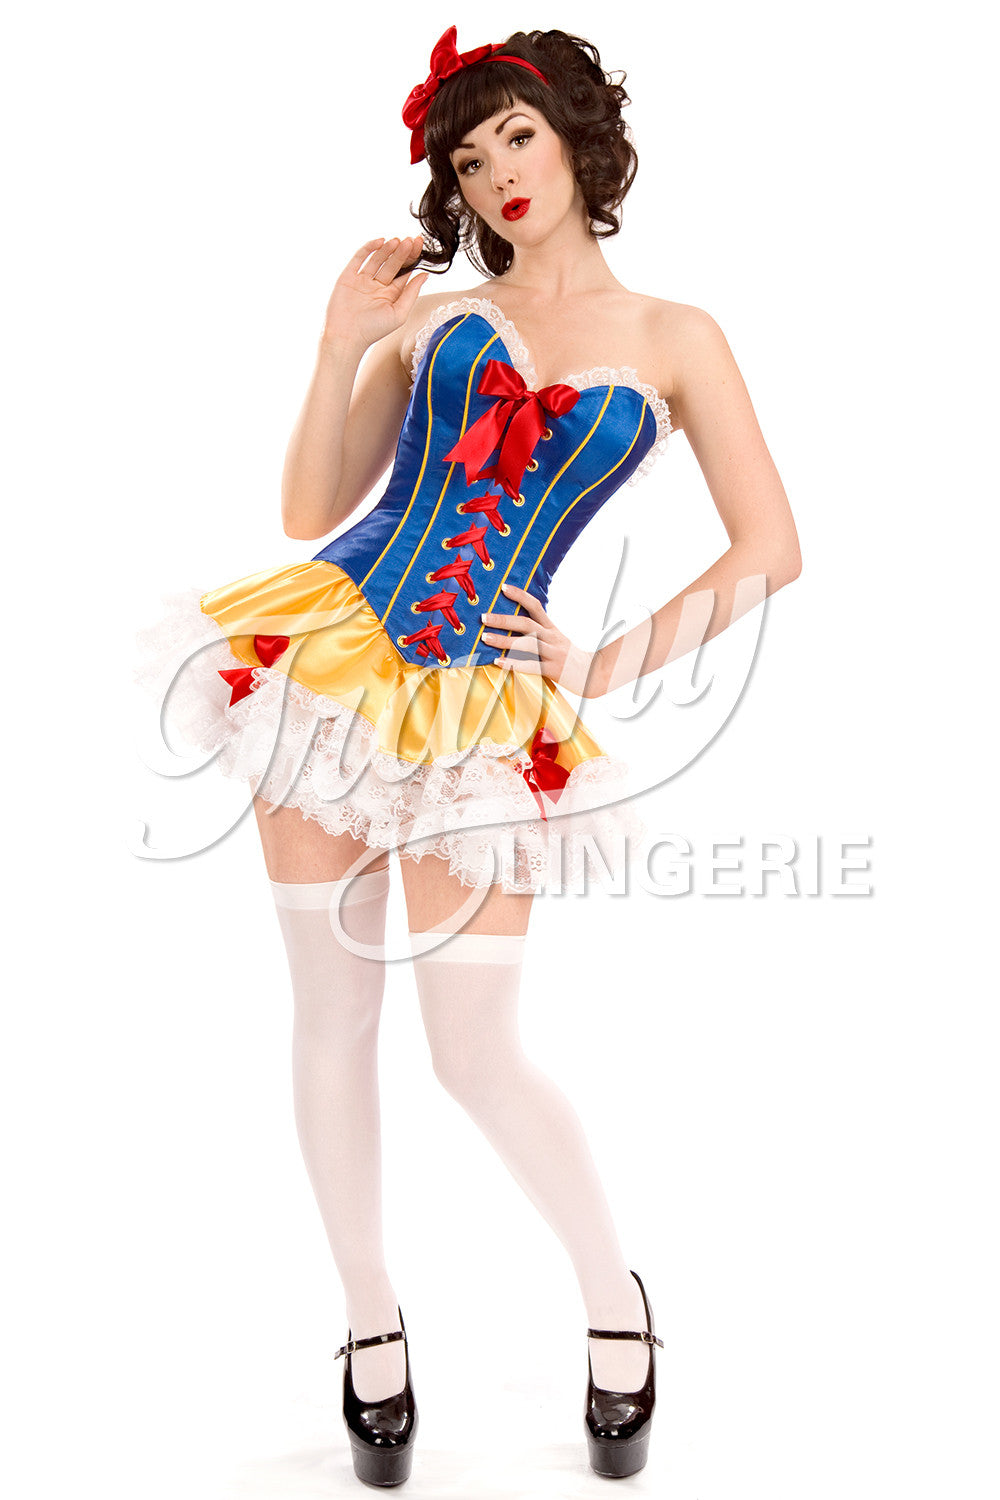 Adult Fairy Tale Princess Corset Women Costume, $263.99